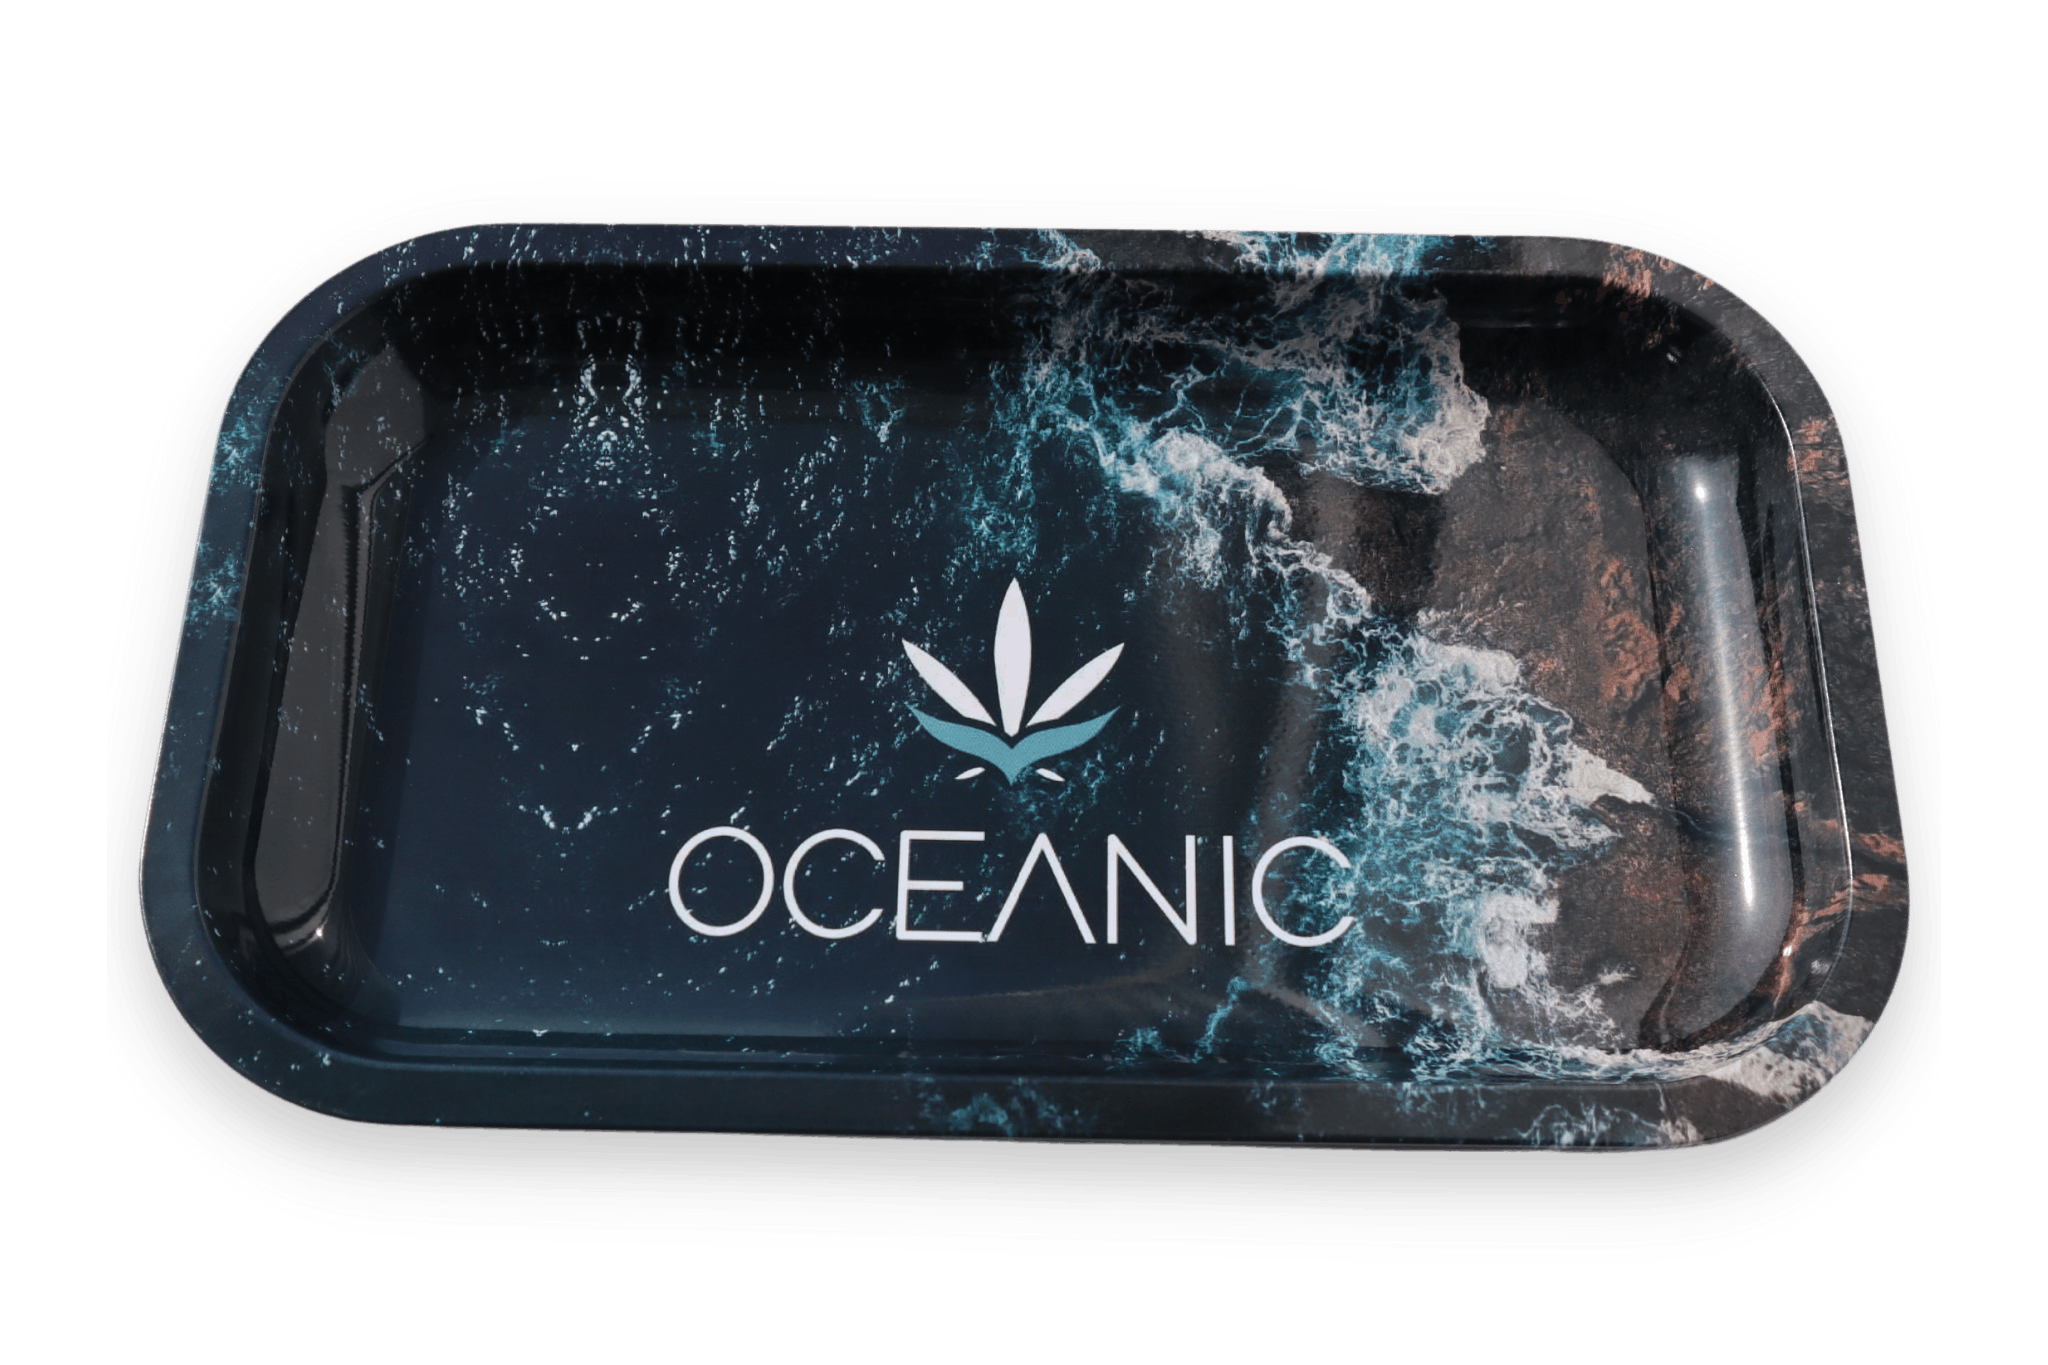 Oceanic Metal Rolling Tray | Oceanic Cannabis & Coffee O'Leary Avenue